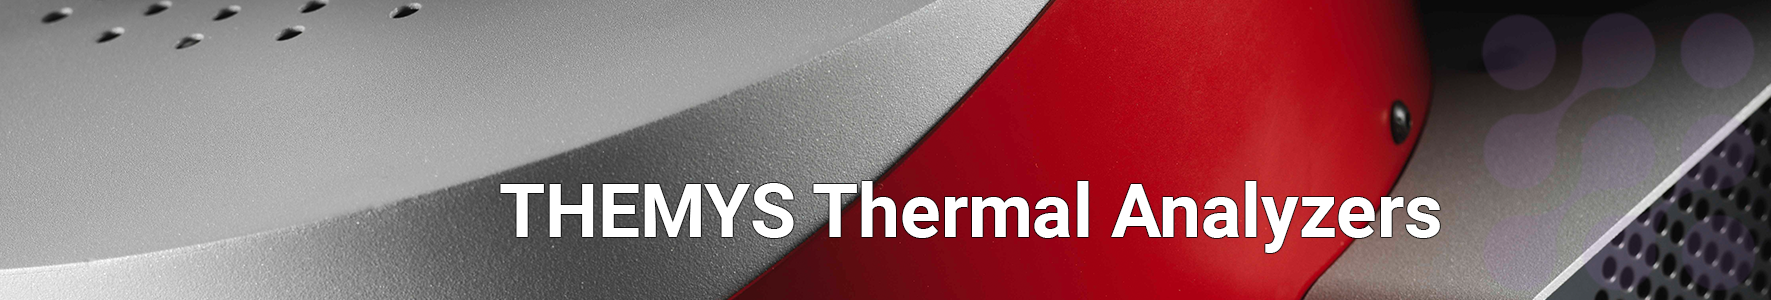 THEMYS Thermal Analyzers